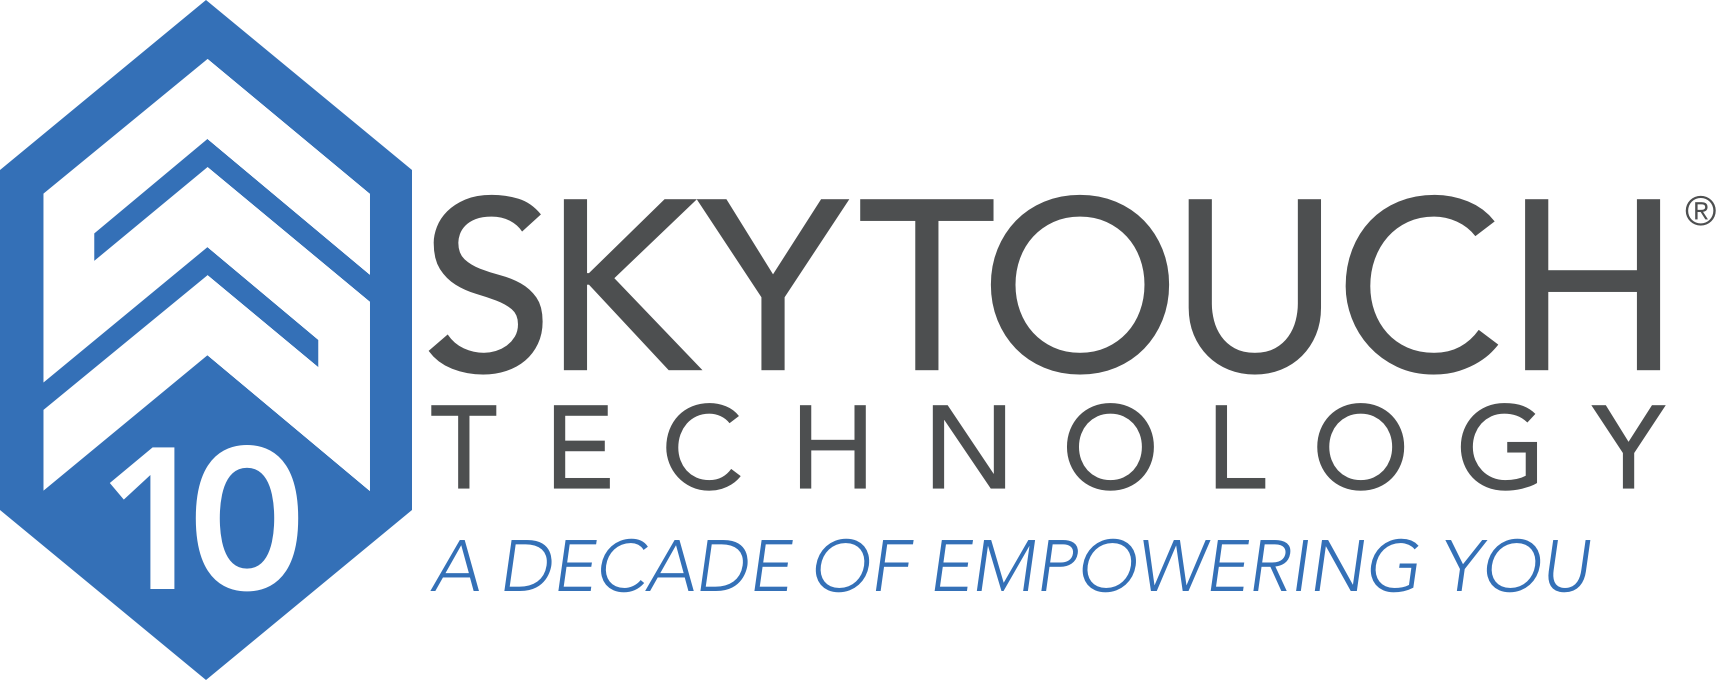 SkyTouch 10 year logo